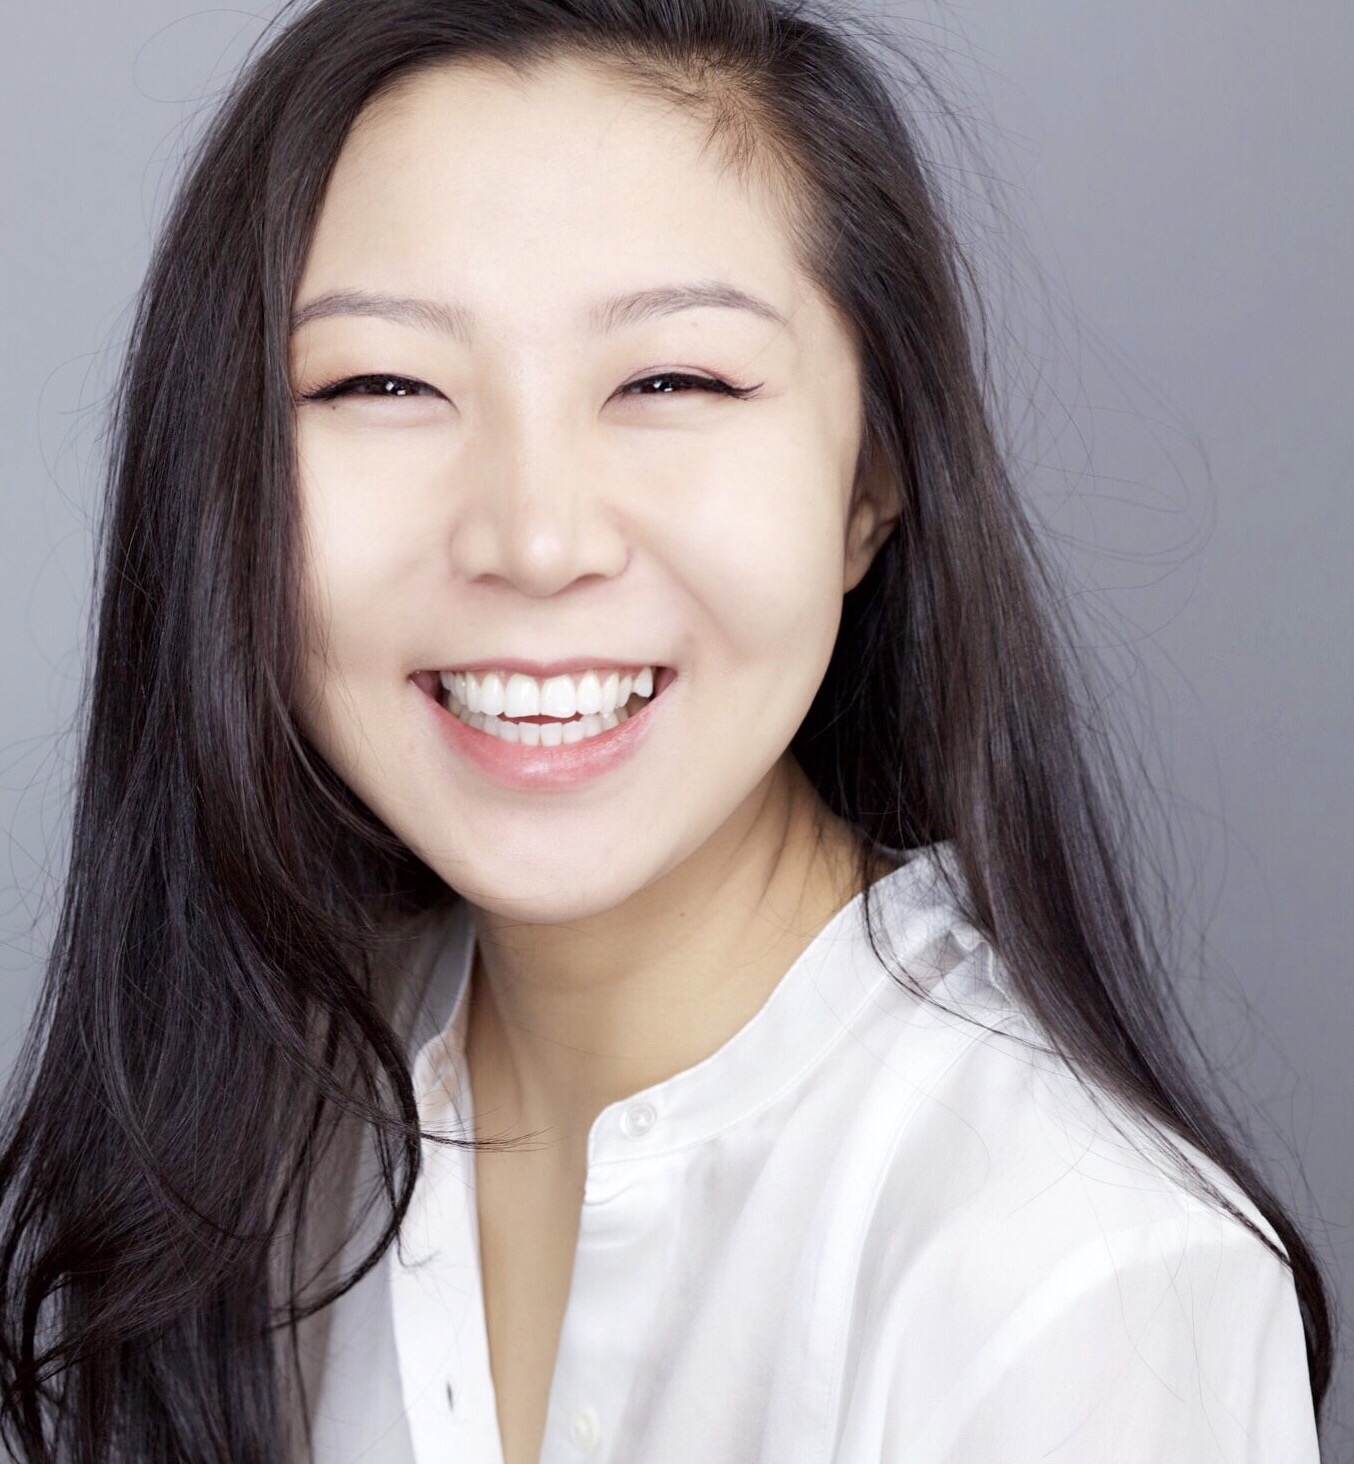 Yishu Mao (dark long hair, white shirt) smiling into the camera